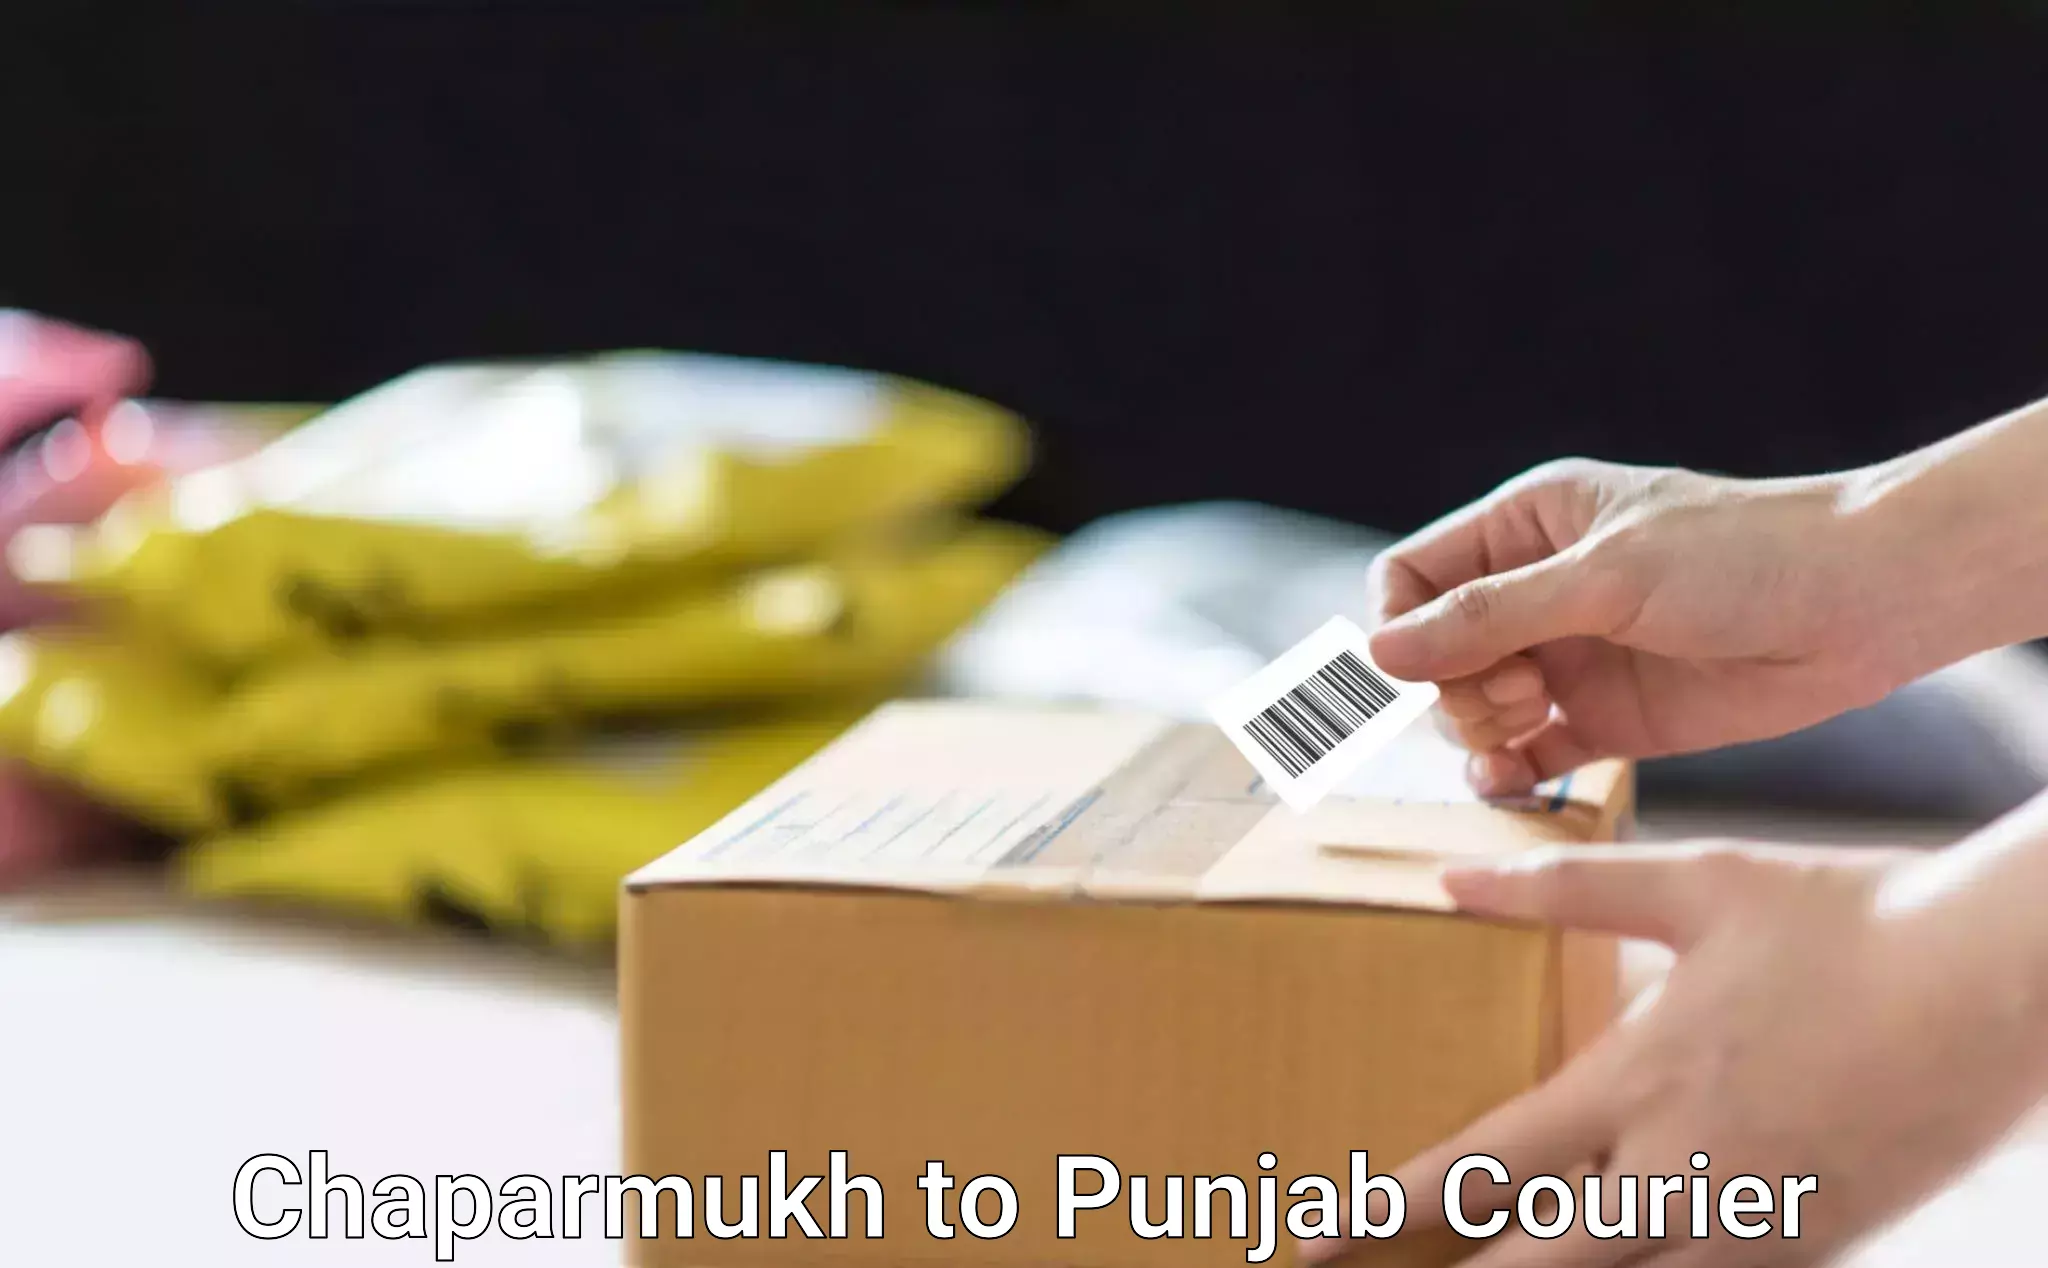 Reliable package handling Chaparmukh to Barnala